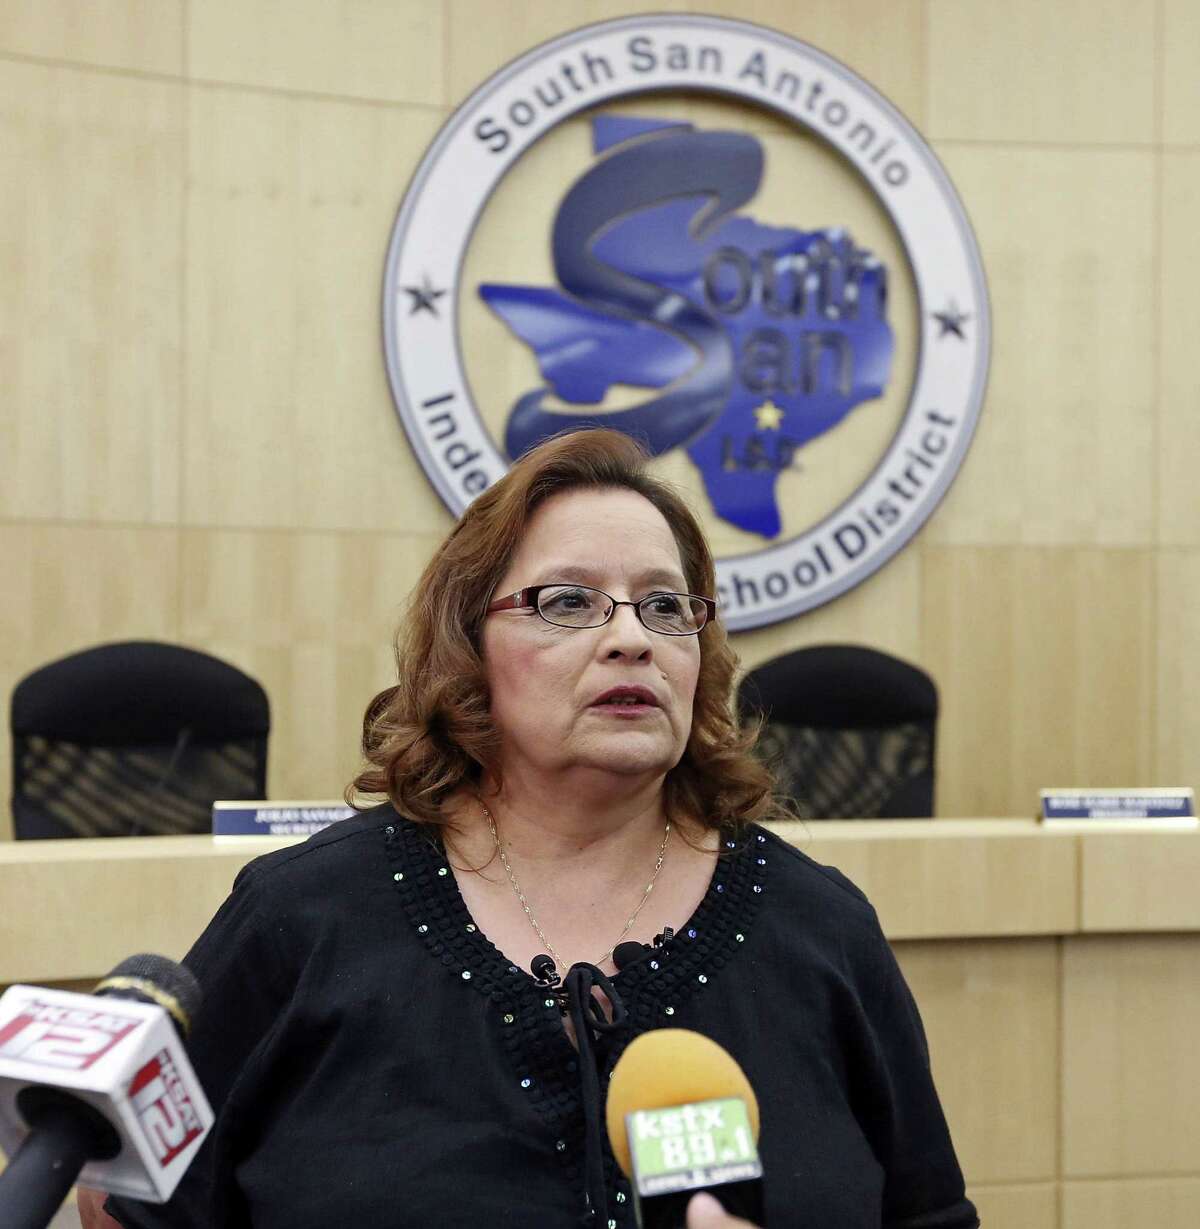 Rose Marie Martinez was deposed Tuesday as South San Antonio ISD's board president.